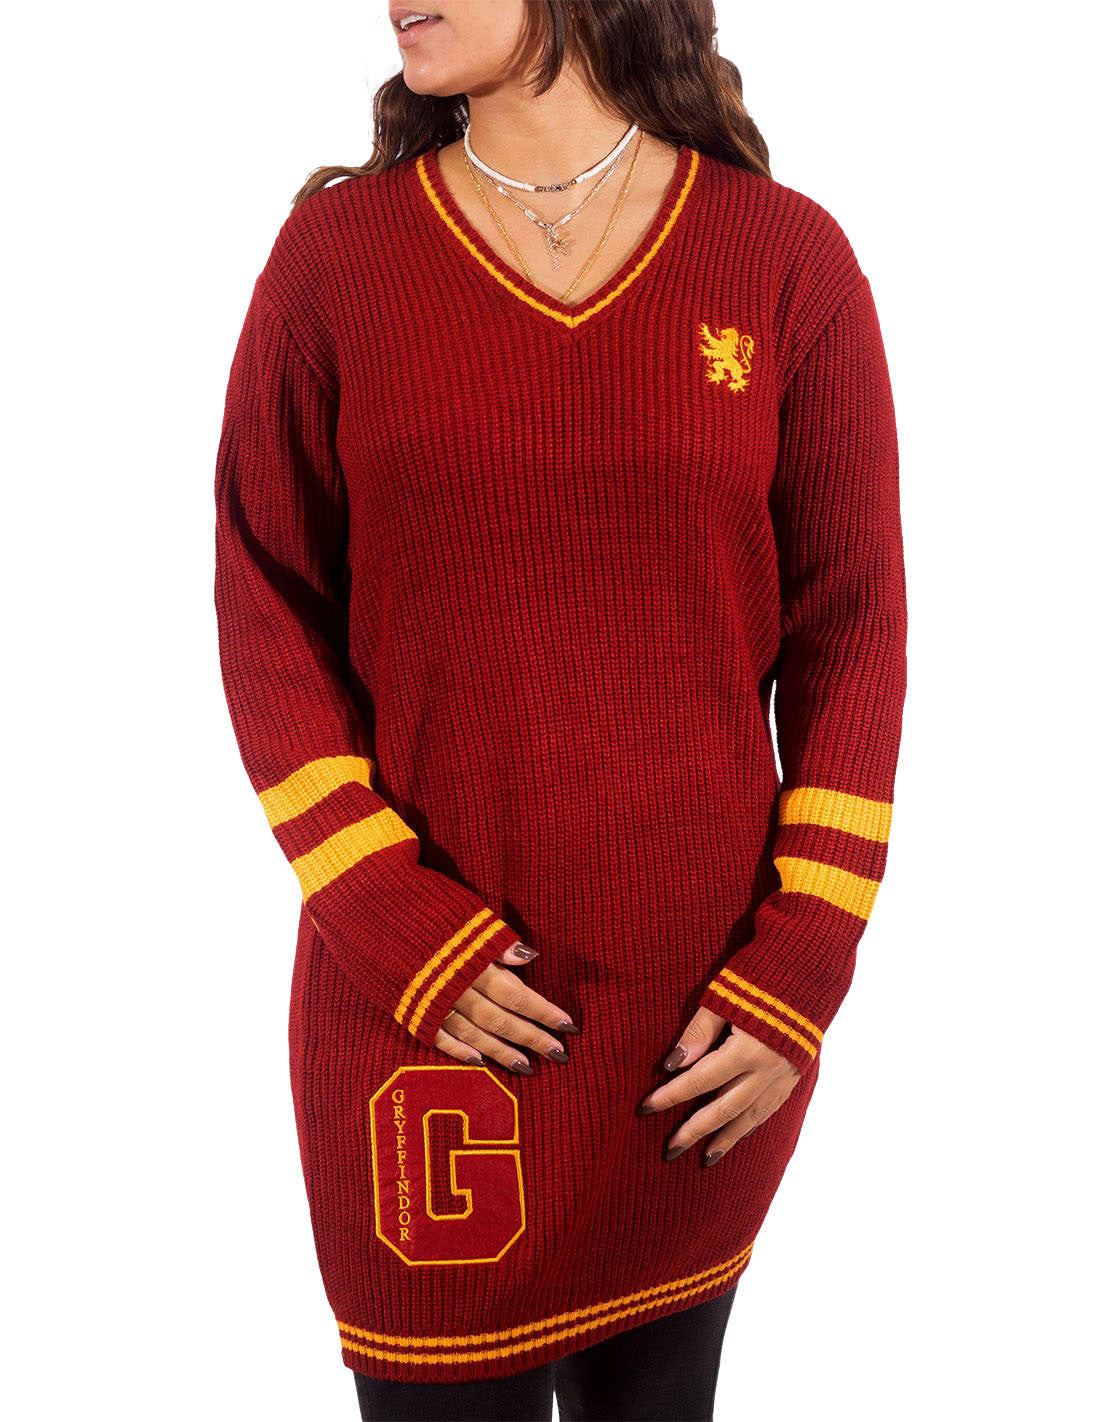 Harry Potter Sweater Dress - Gryffindor